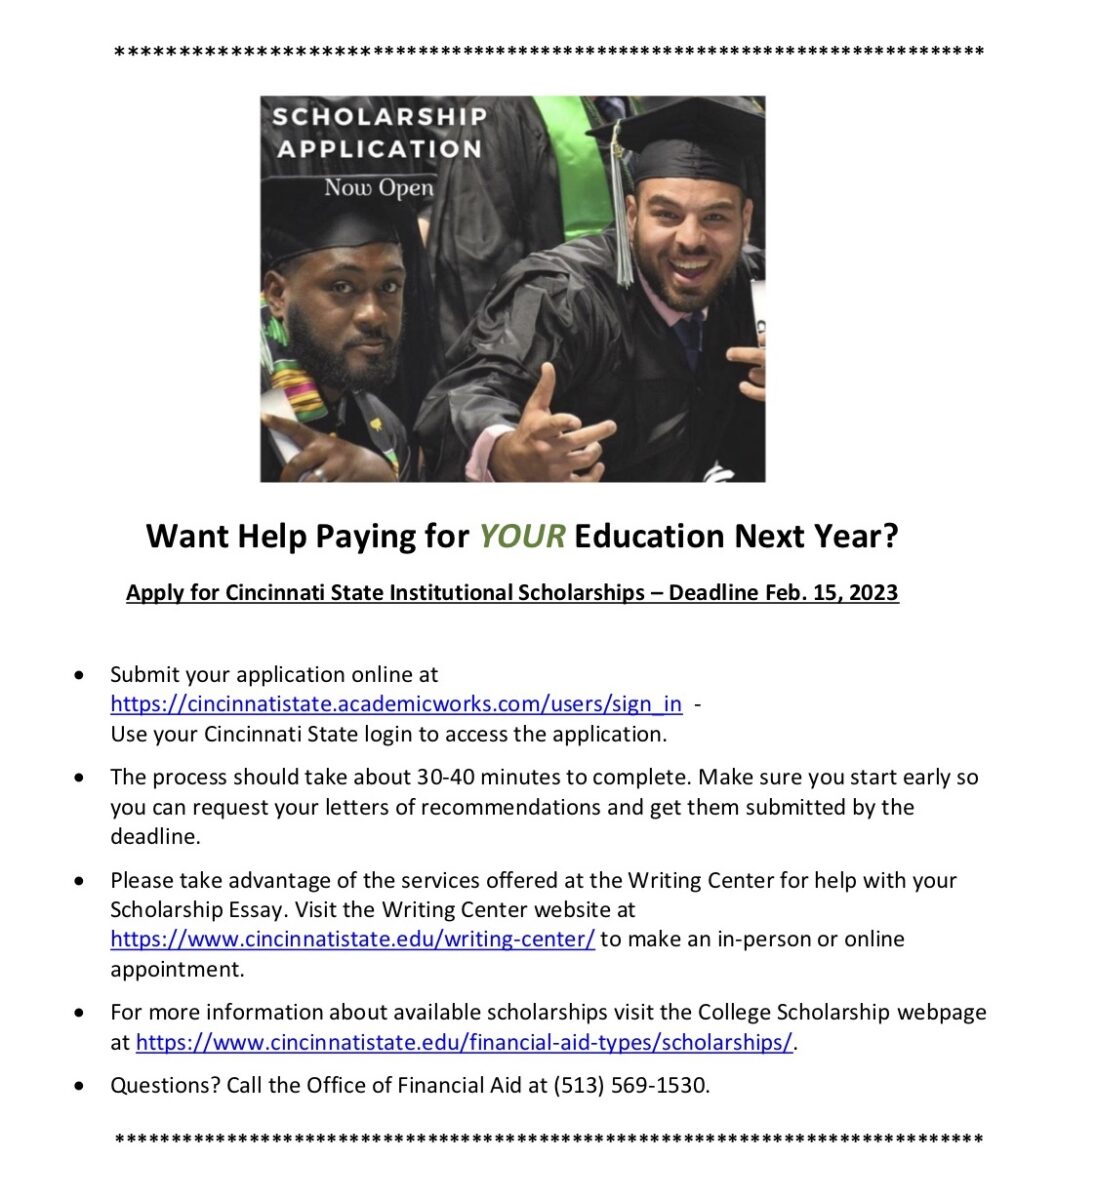 Scholarship application flyer